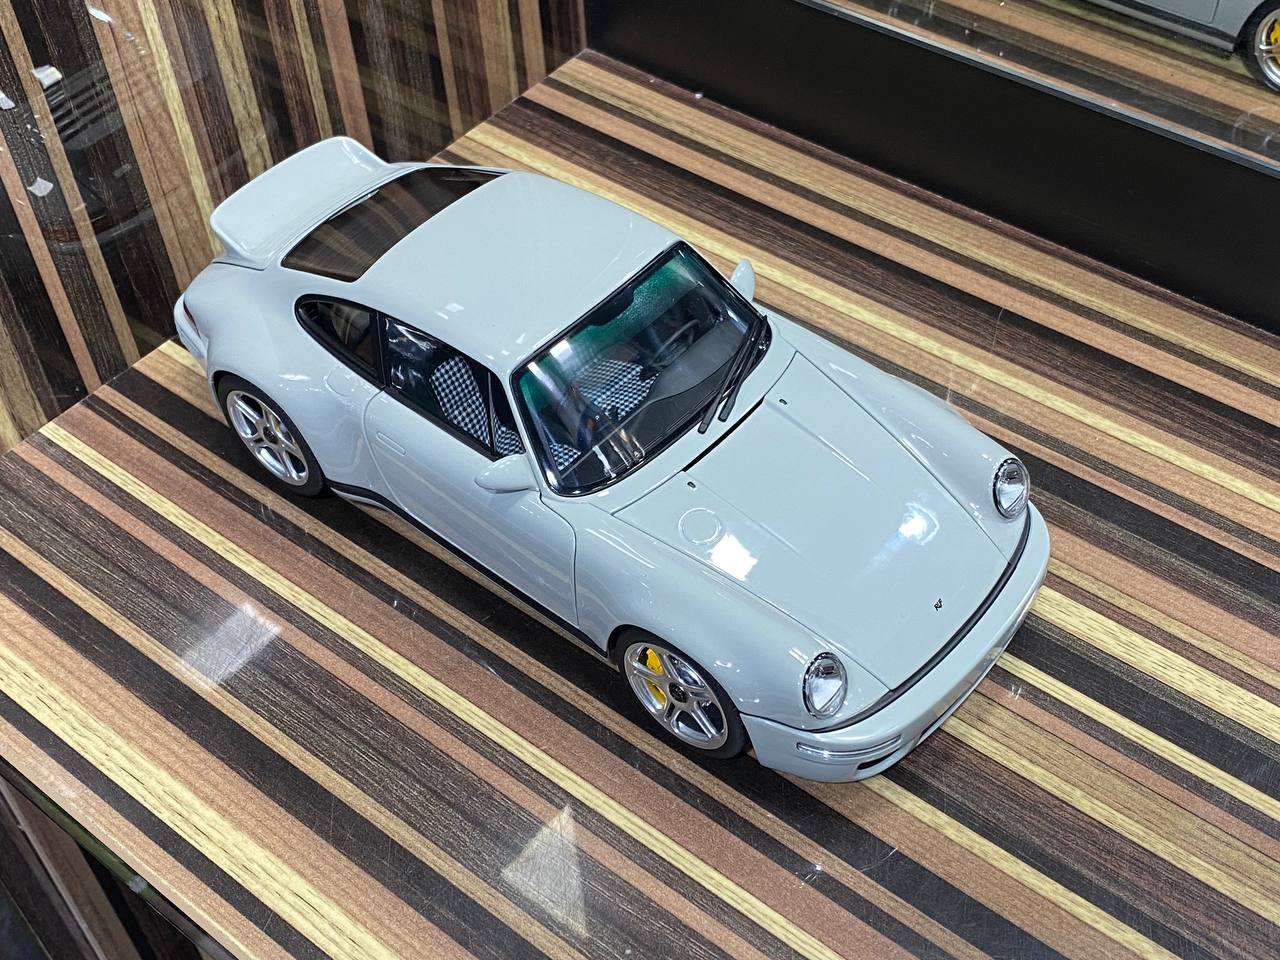 1/18 Diecast  Porsche RUF SCR Chalk Grey Almost Real Scale Model Car|Sold in Dturman.com Dubai UAE.